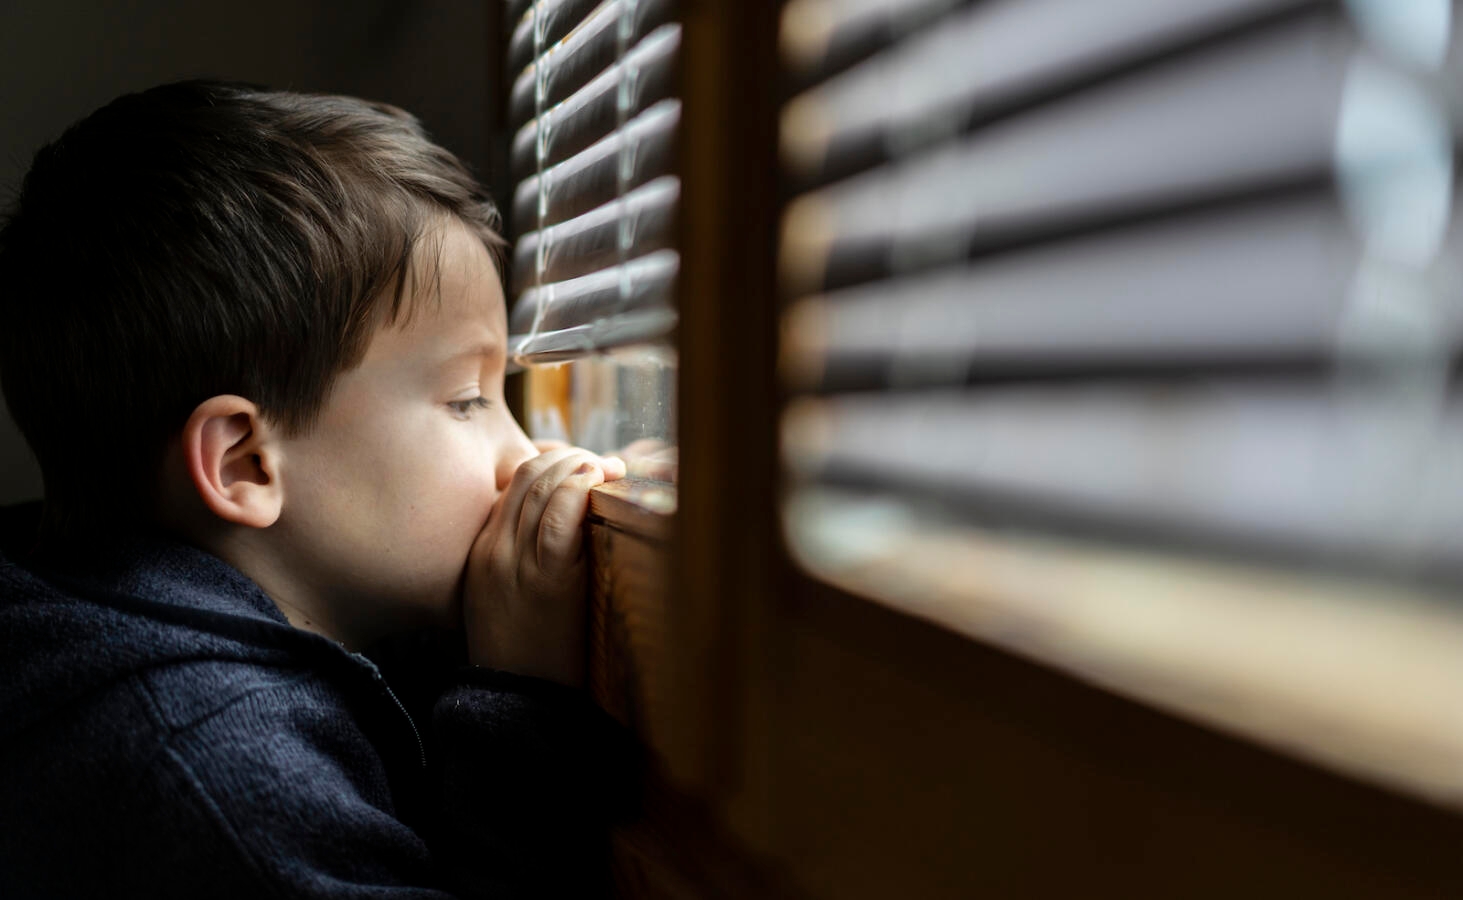 Small sad boy looking through the window during Coronavirus isolation.